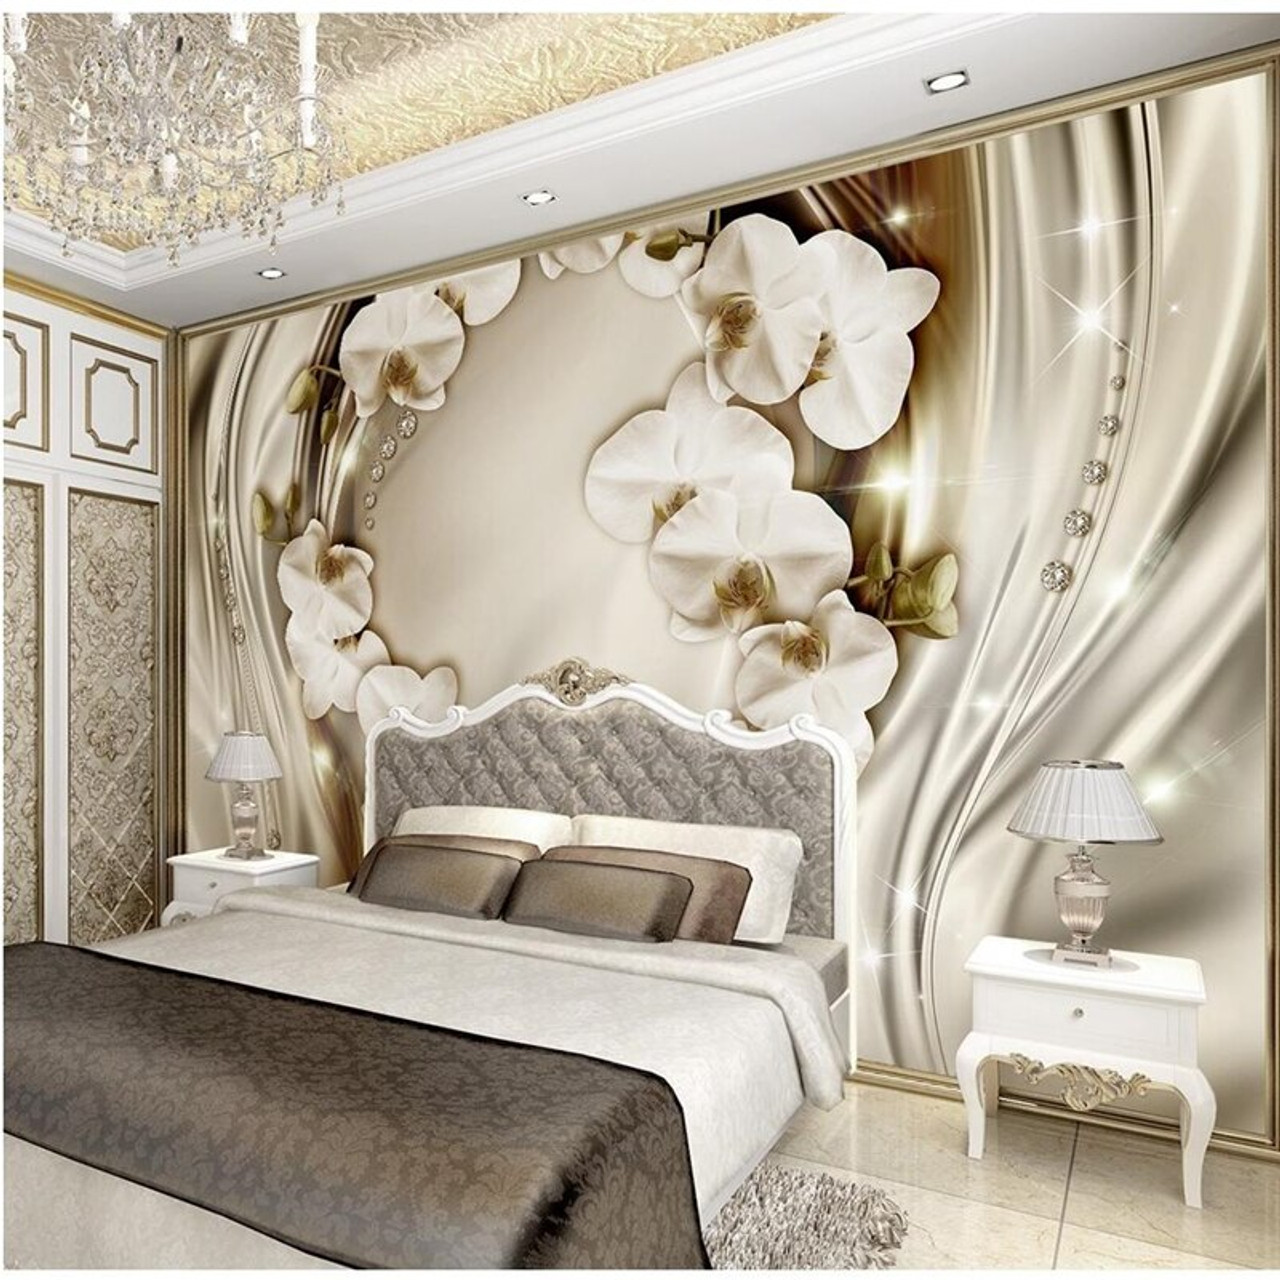 Beibehang Custom Wall Paper Diamond Romance Luxury Wall Covering Bedroom Mural Background 3d Flooring Wallpaper For Walls 3 D